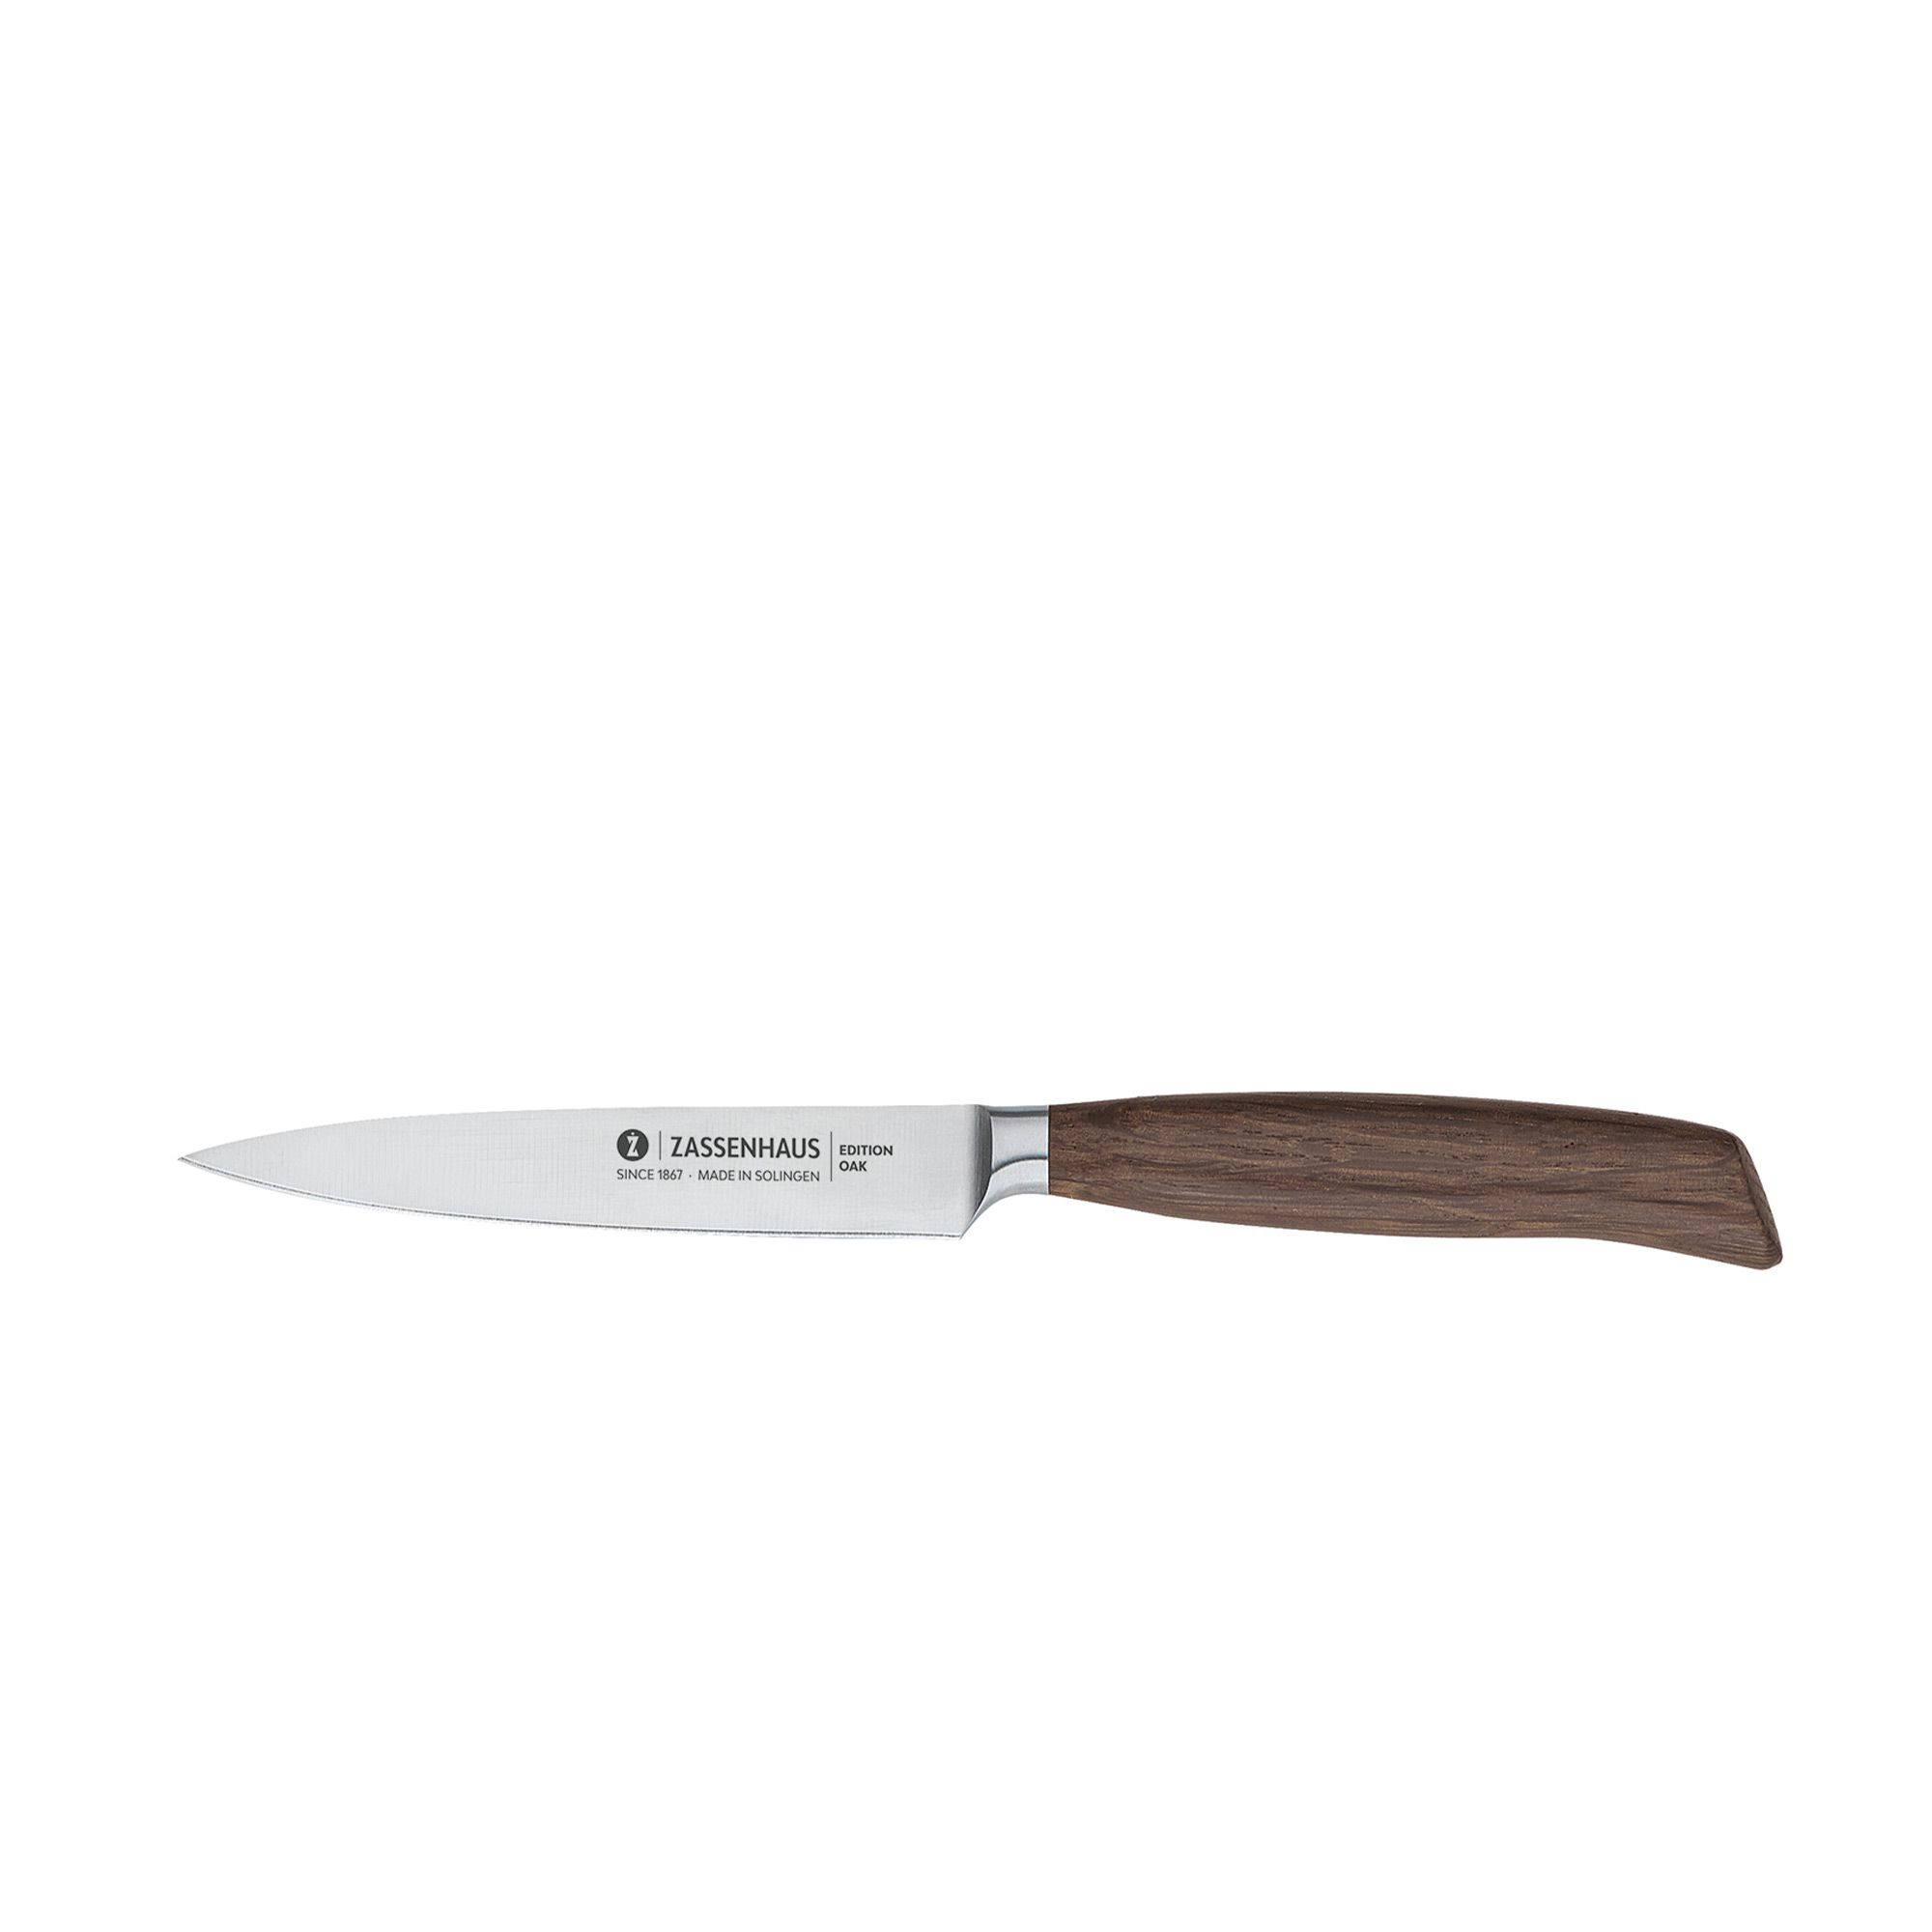 Zassenhaus - Larding knife 12cm - EDITION OAK